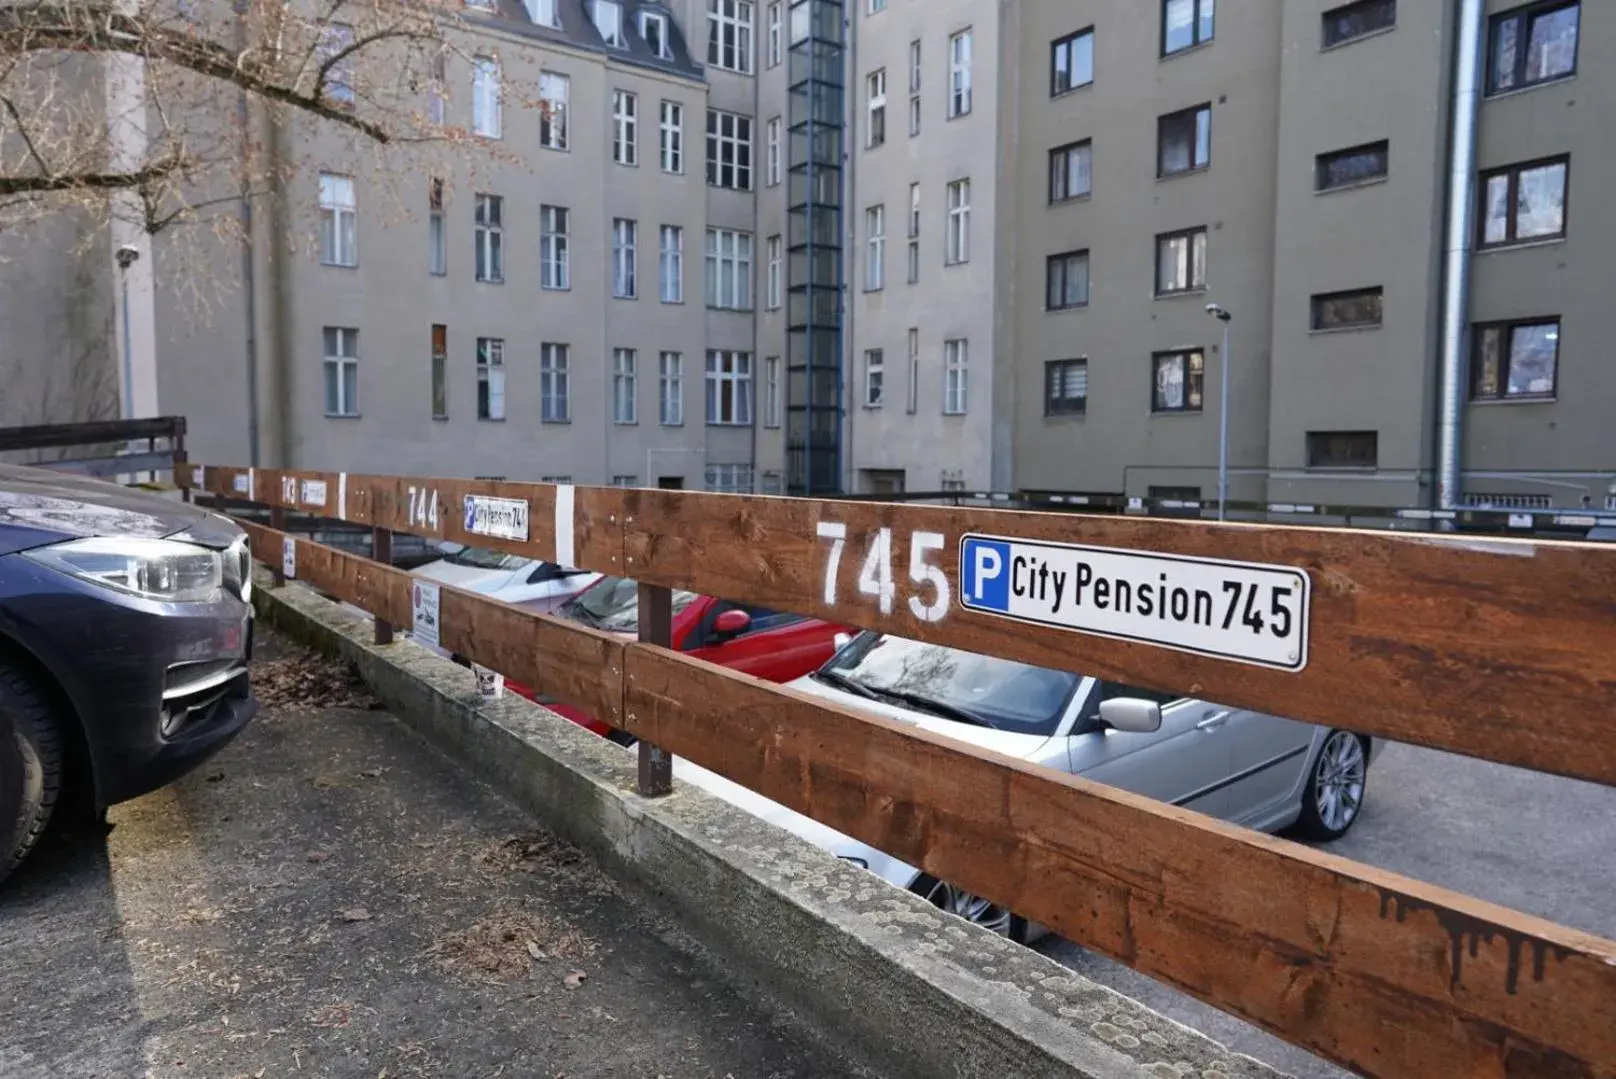 Parking in City Pension Berlin